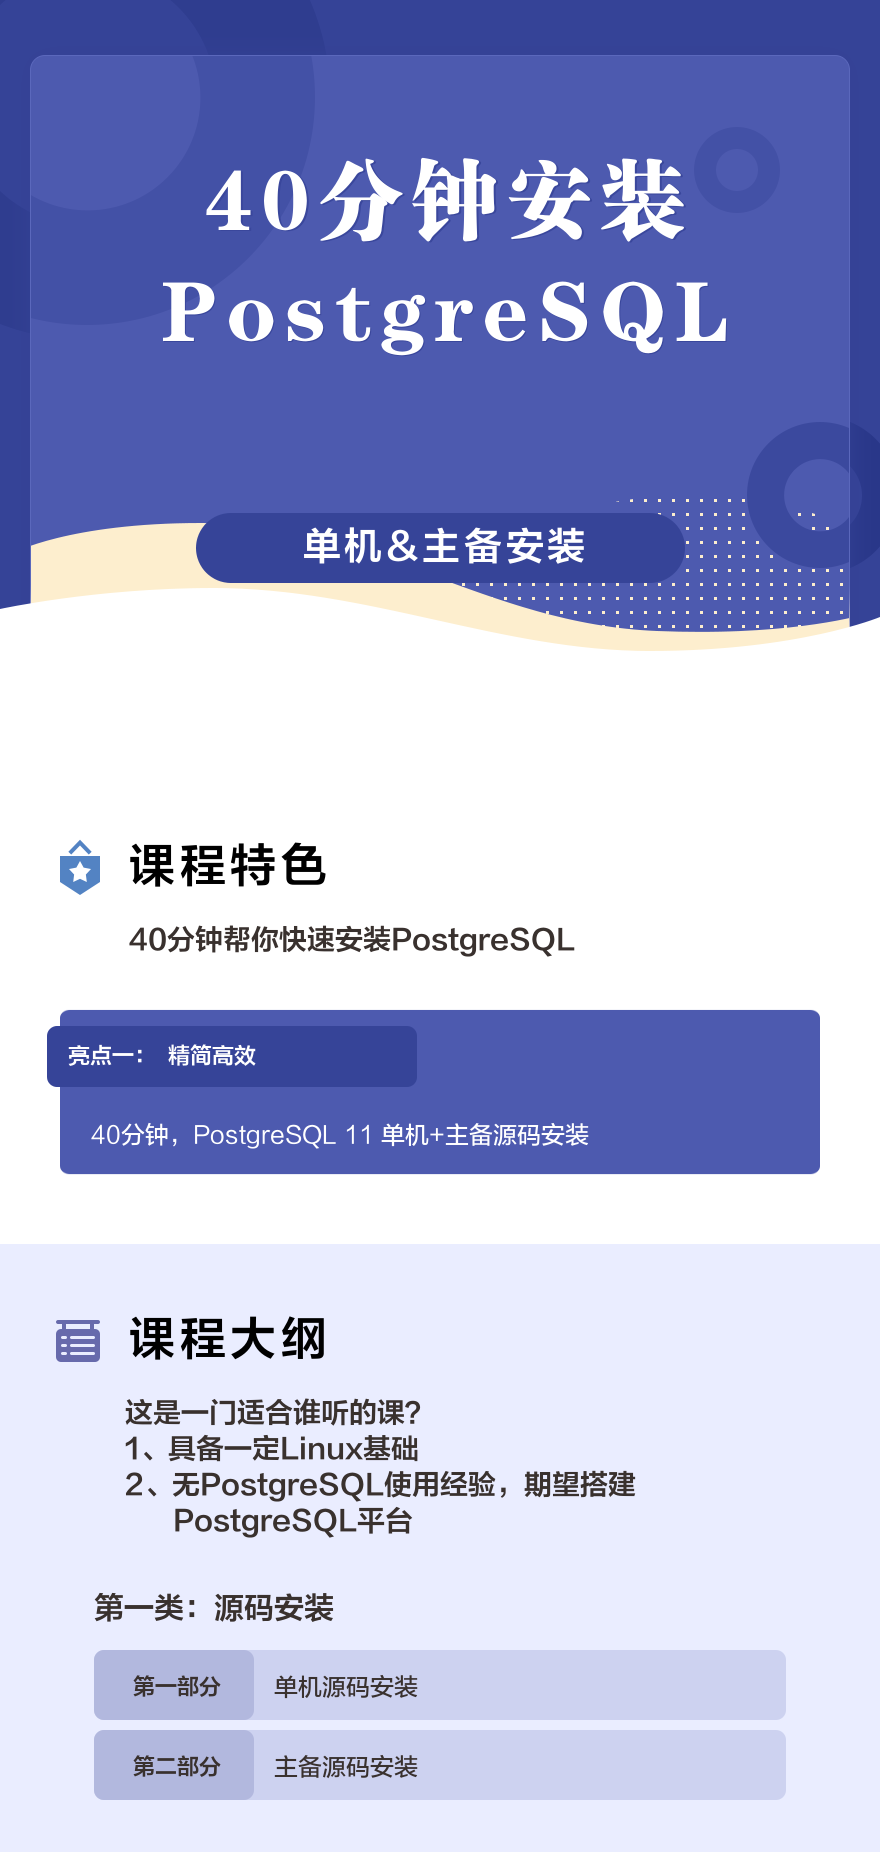 PostgreSQL简介图.jpg